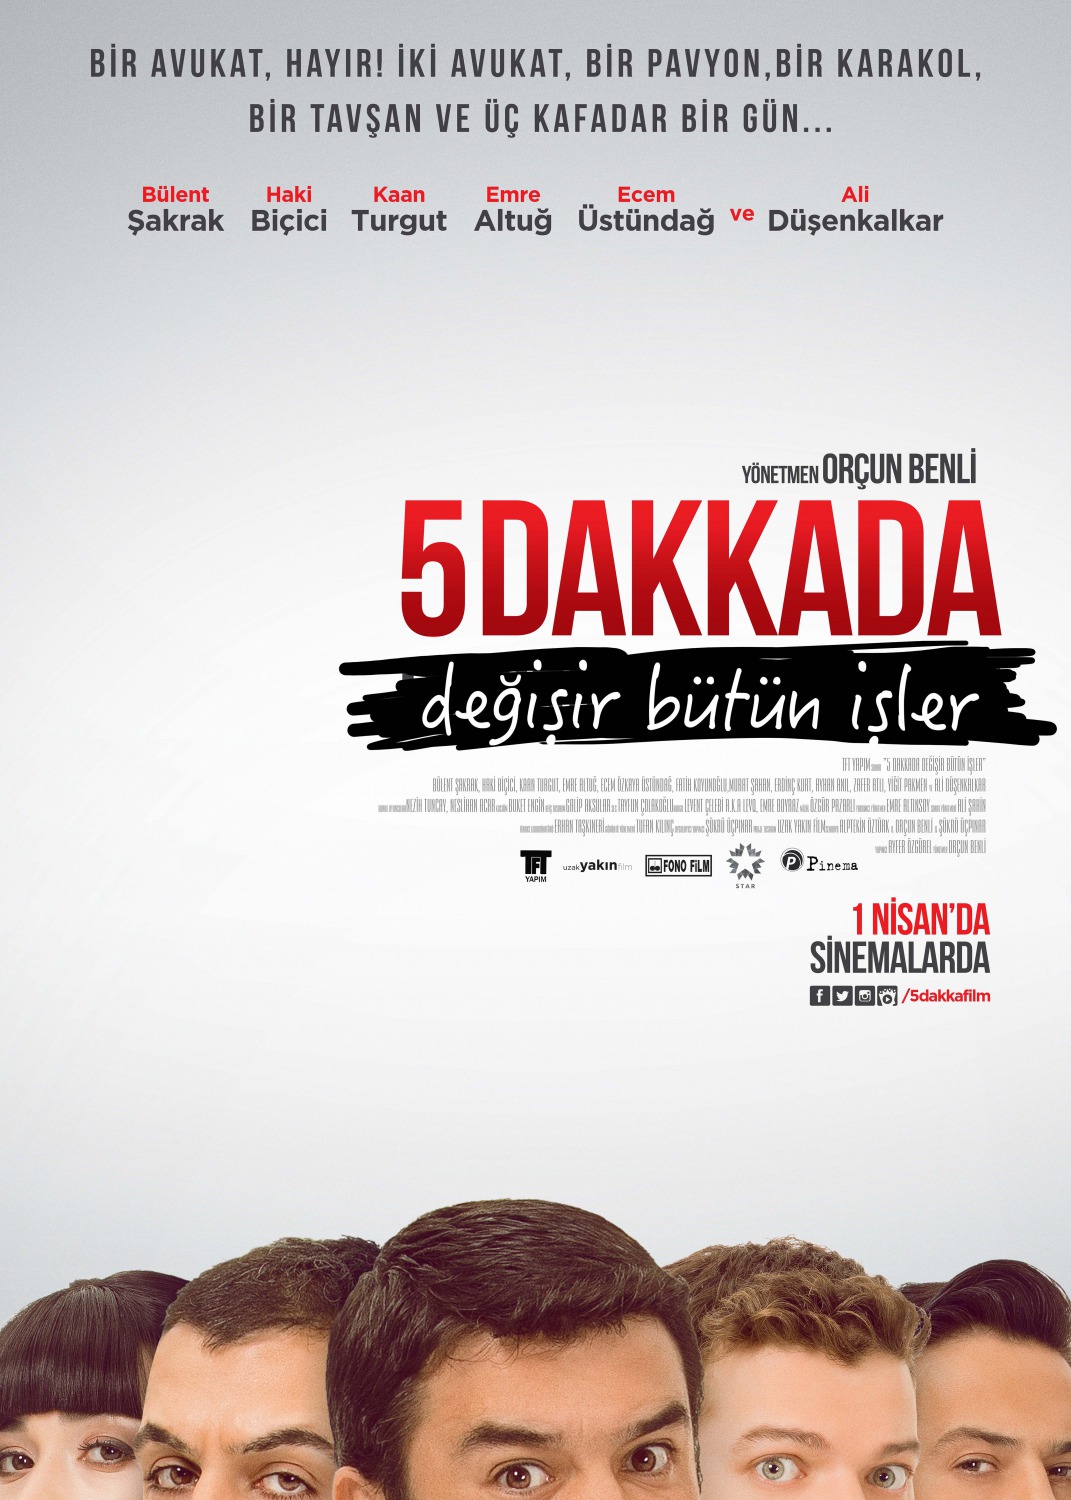 Extra Large Movie Poster Image for 5 Dakkada Degisir Bütün Isler (#1 of 3)